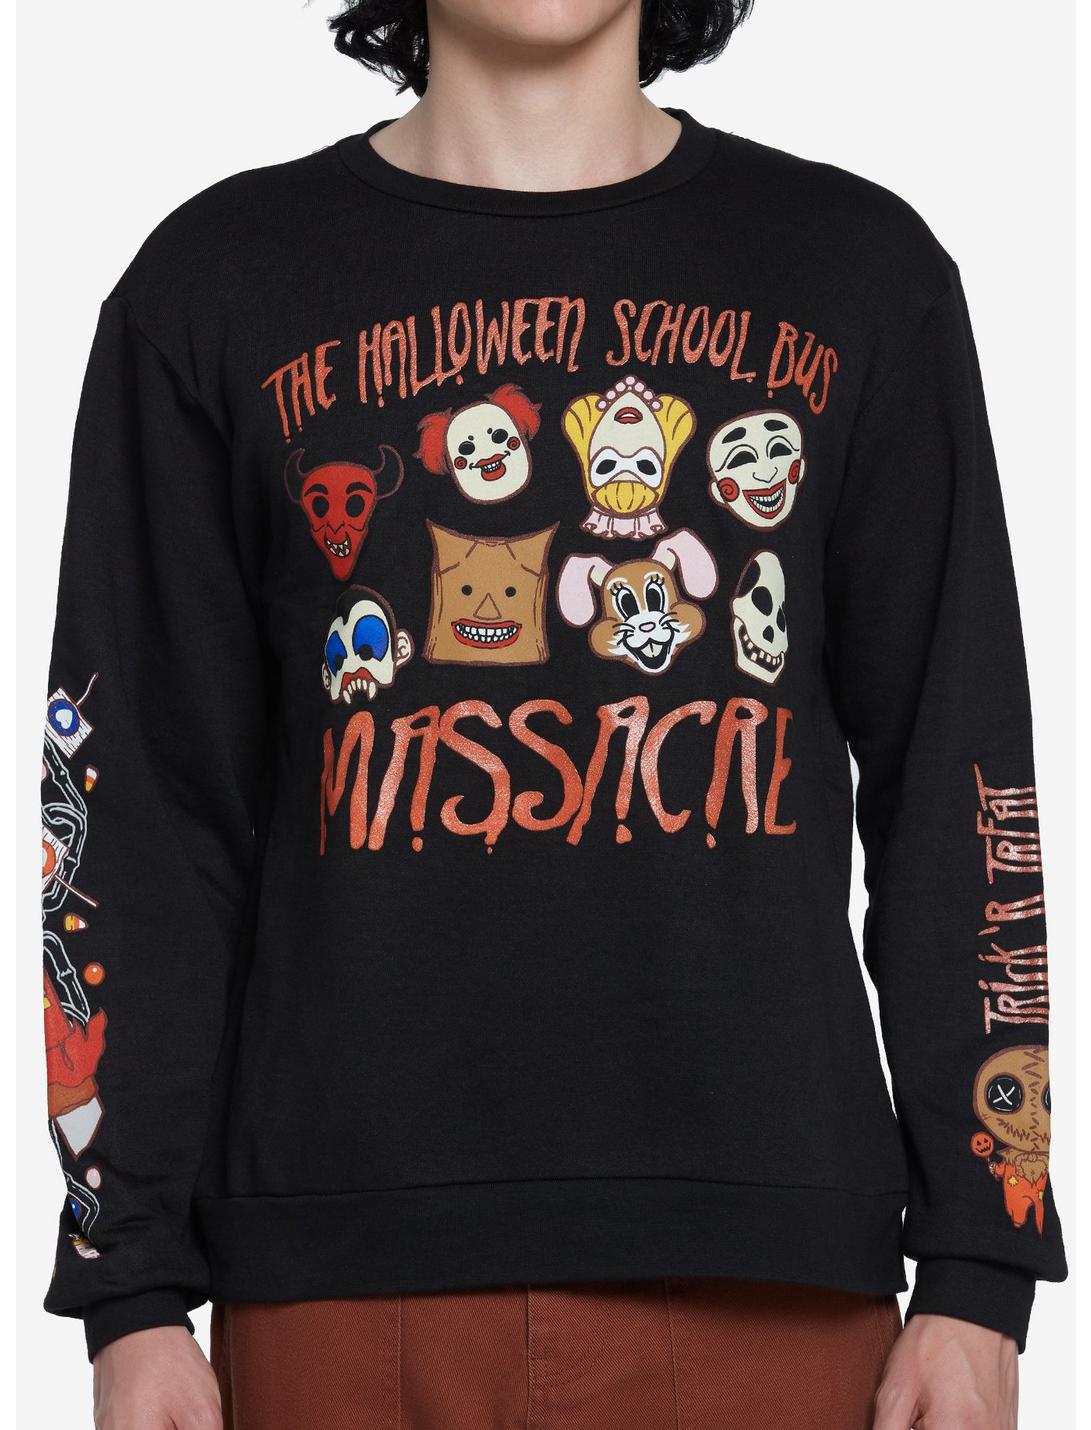 Trick 'R Treat School Bus Massacre Sweatshirt, BLACK, hi-res